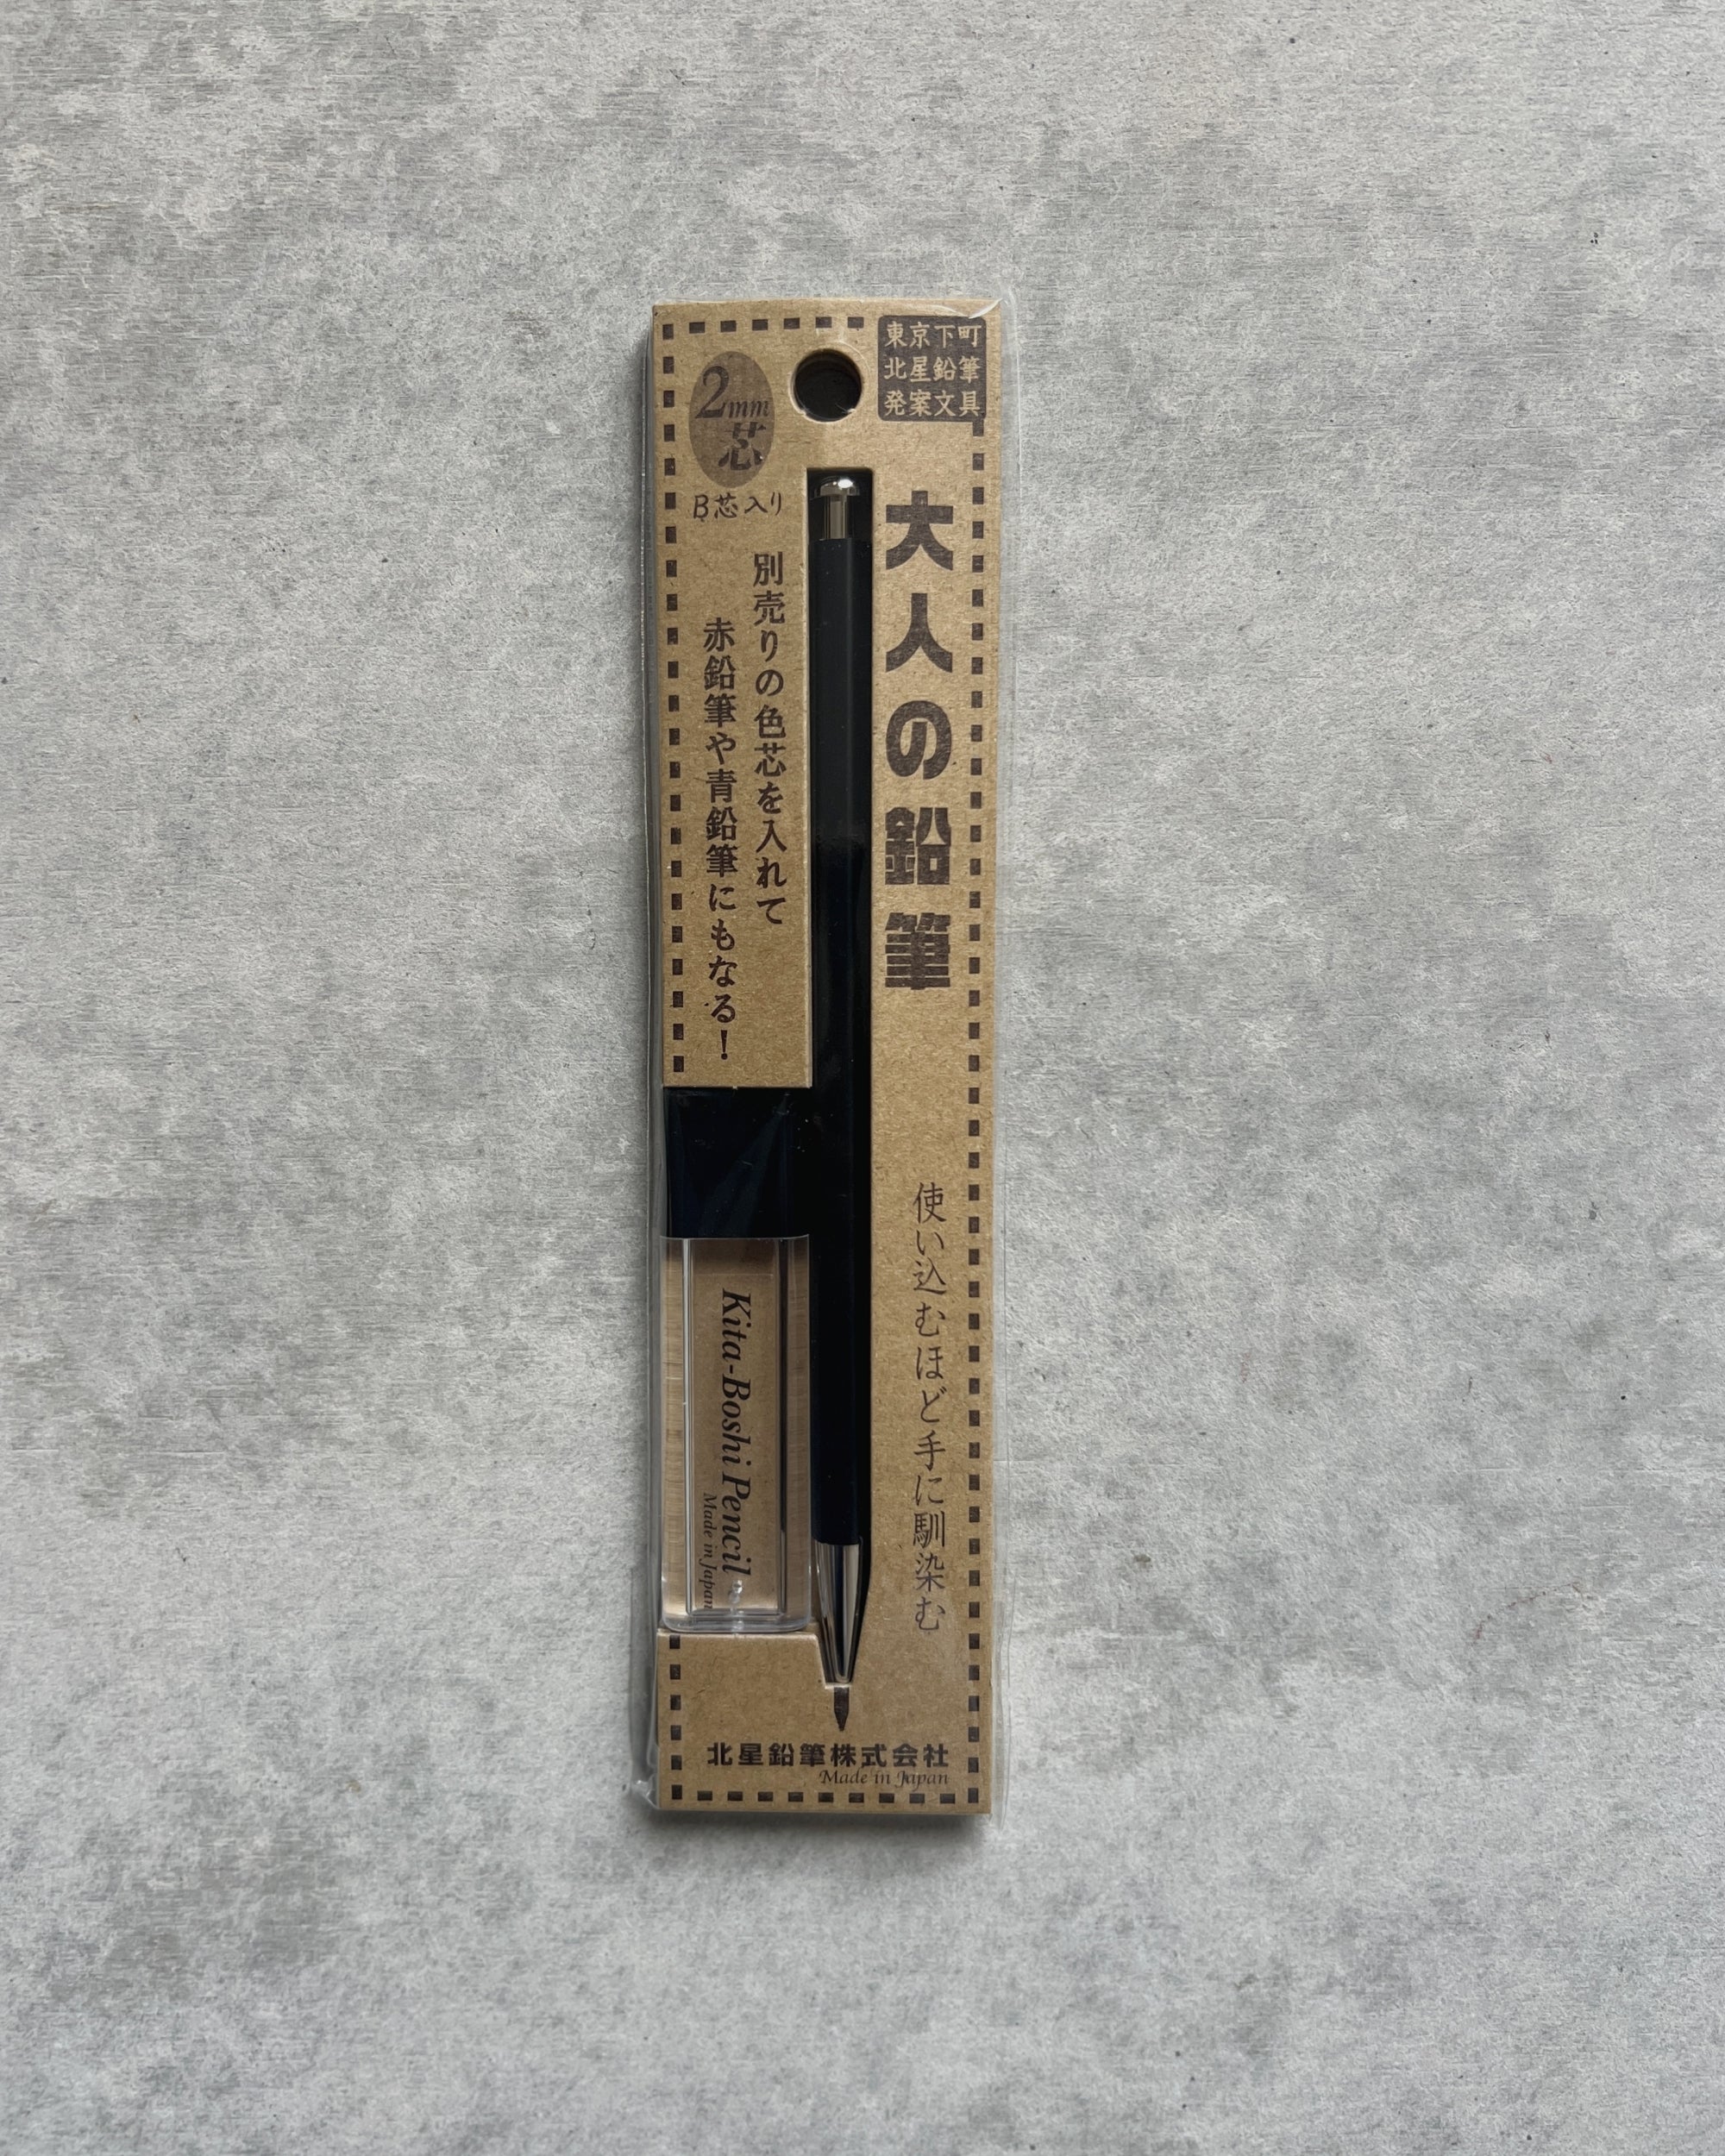 kitaboshi : wooden mechanical pencil with sharpener